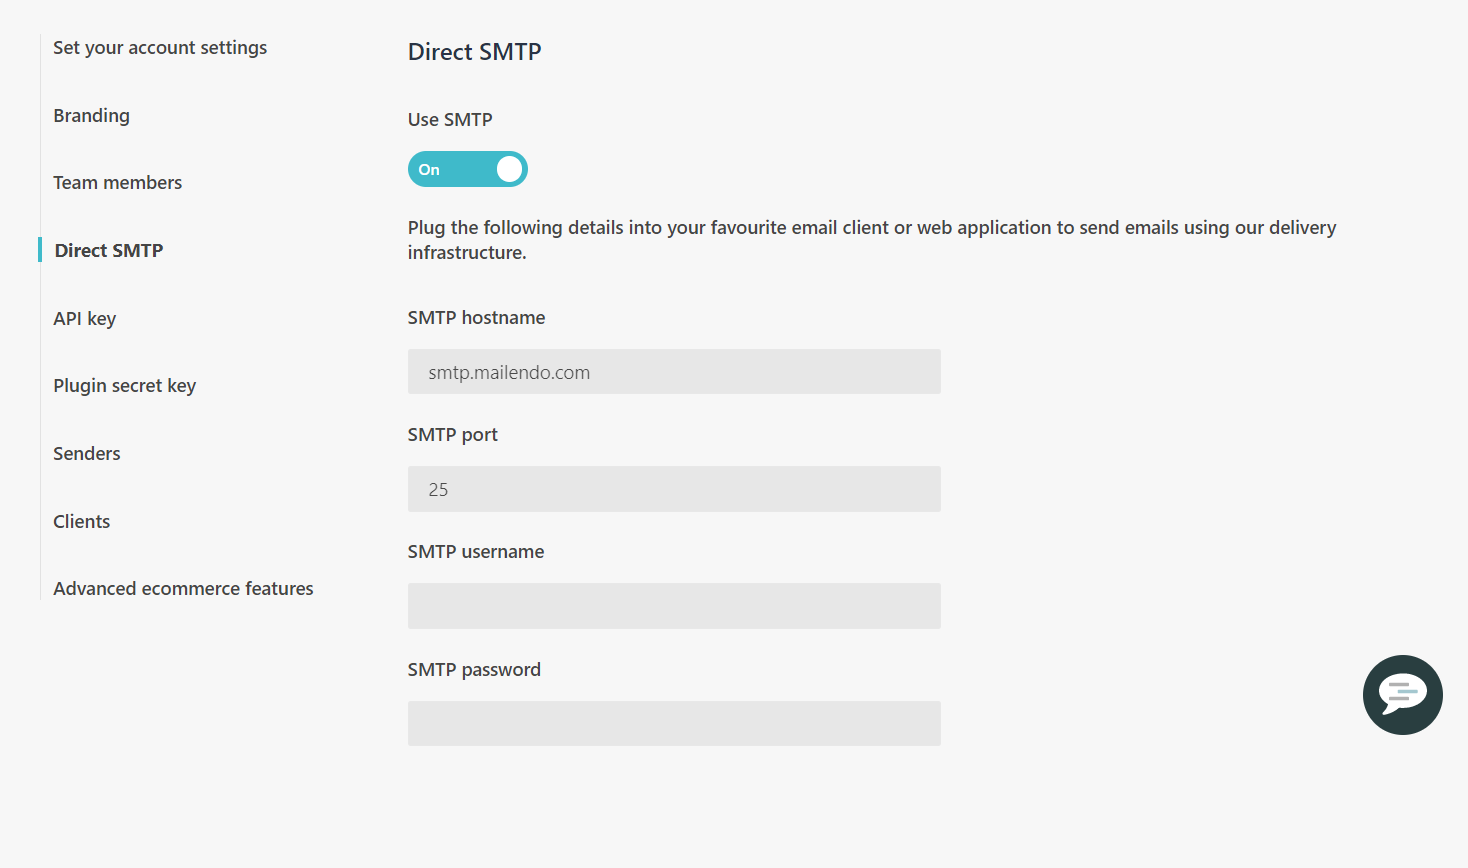 Direct SMTP settings